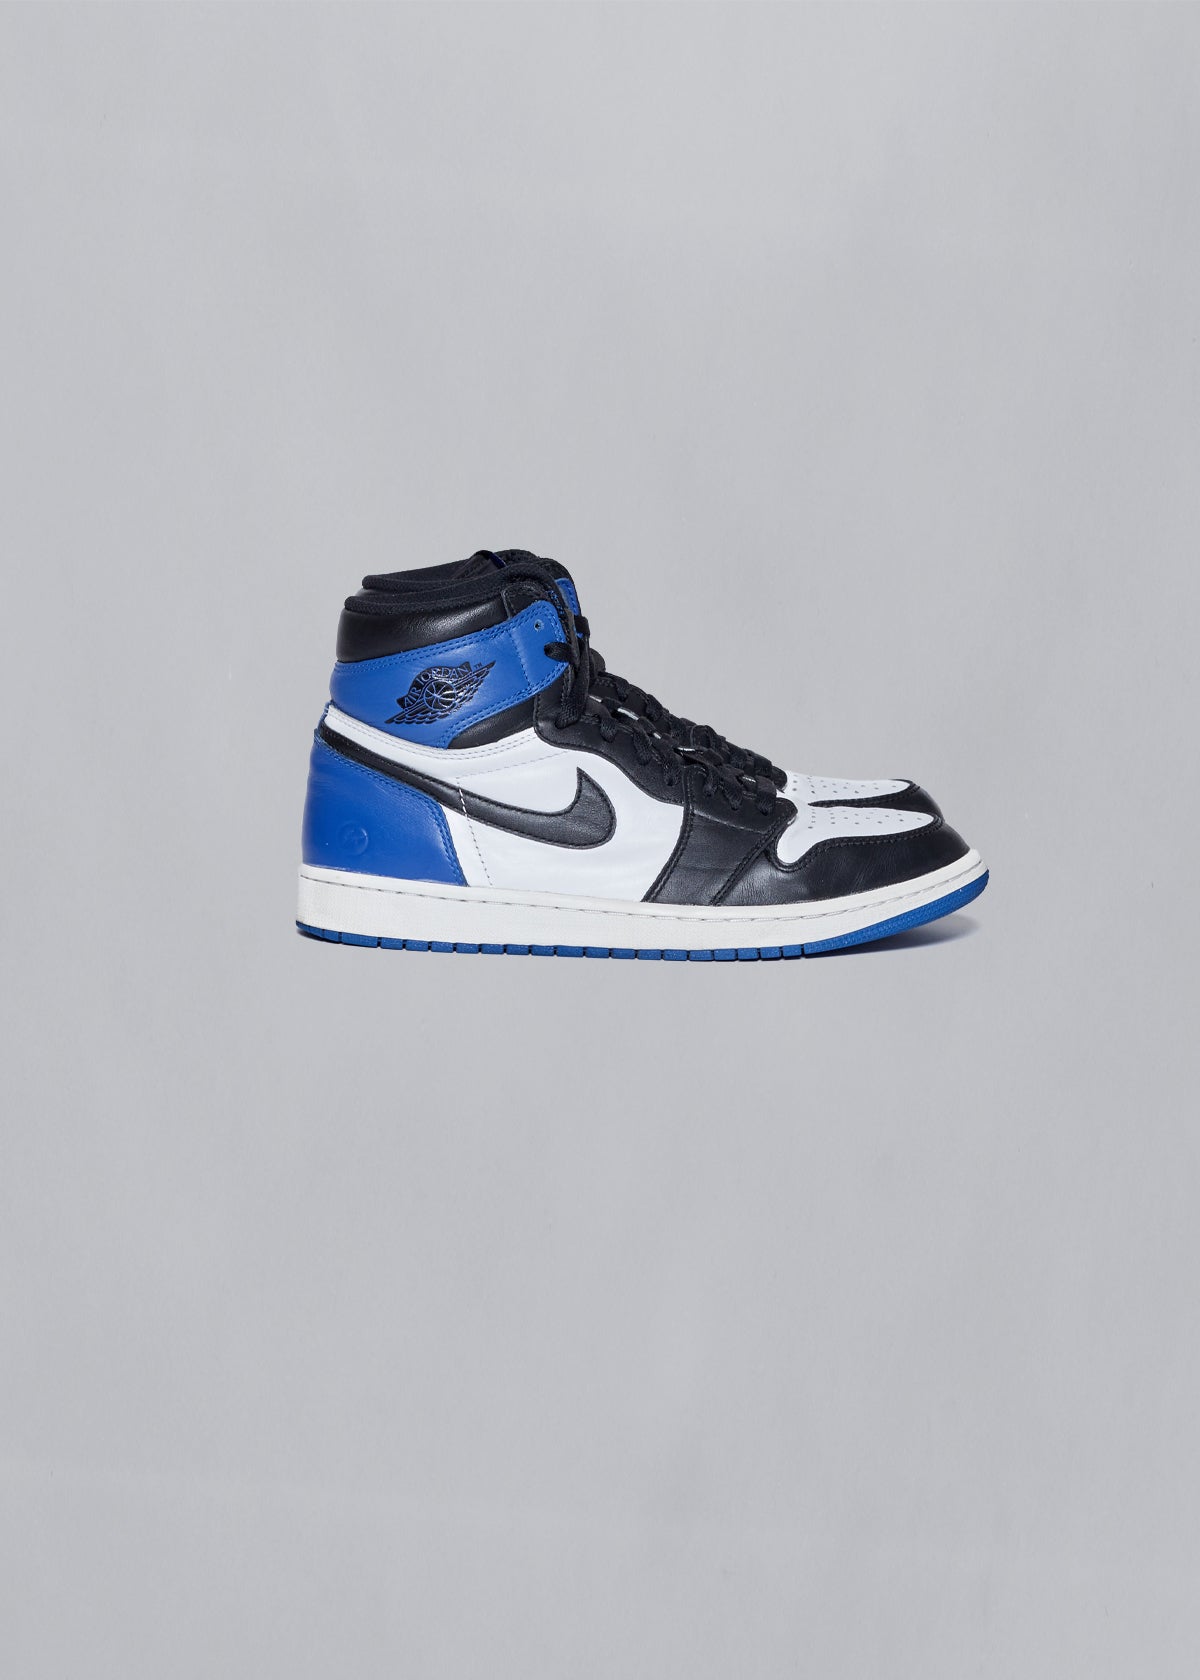 Nike/Fragment Design Air Jordan 1 High 2014 - US11 - The Archivist Store